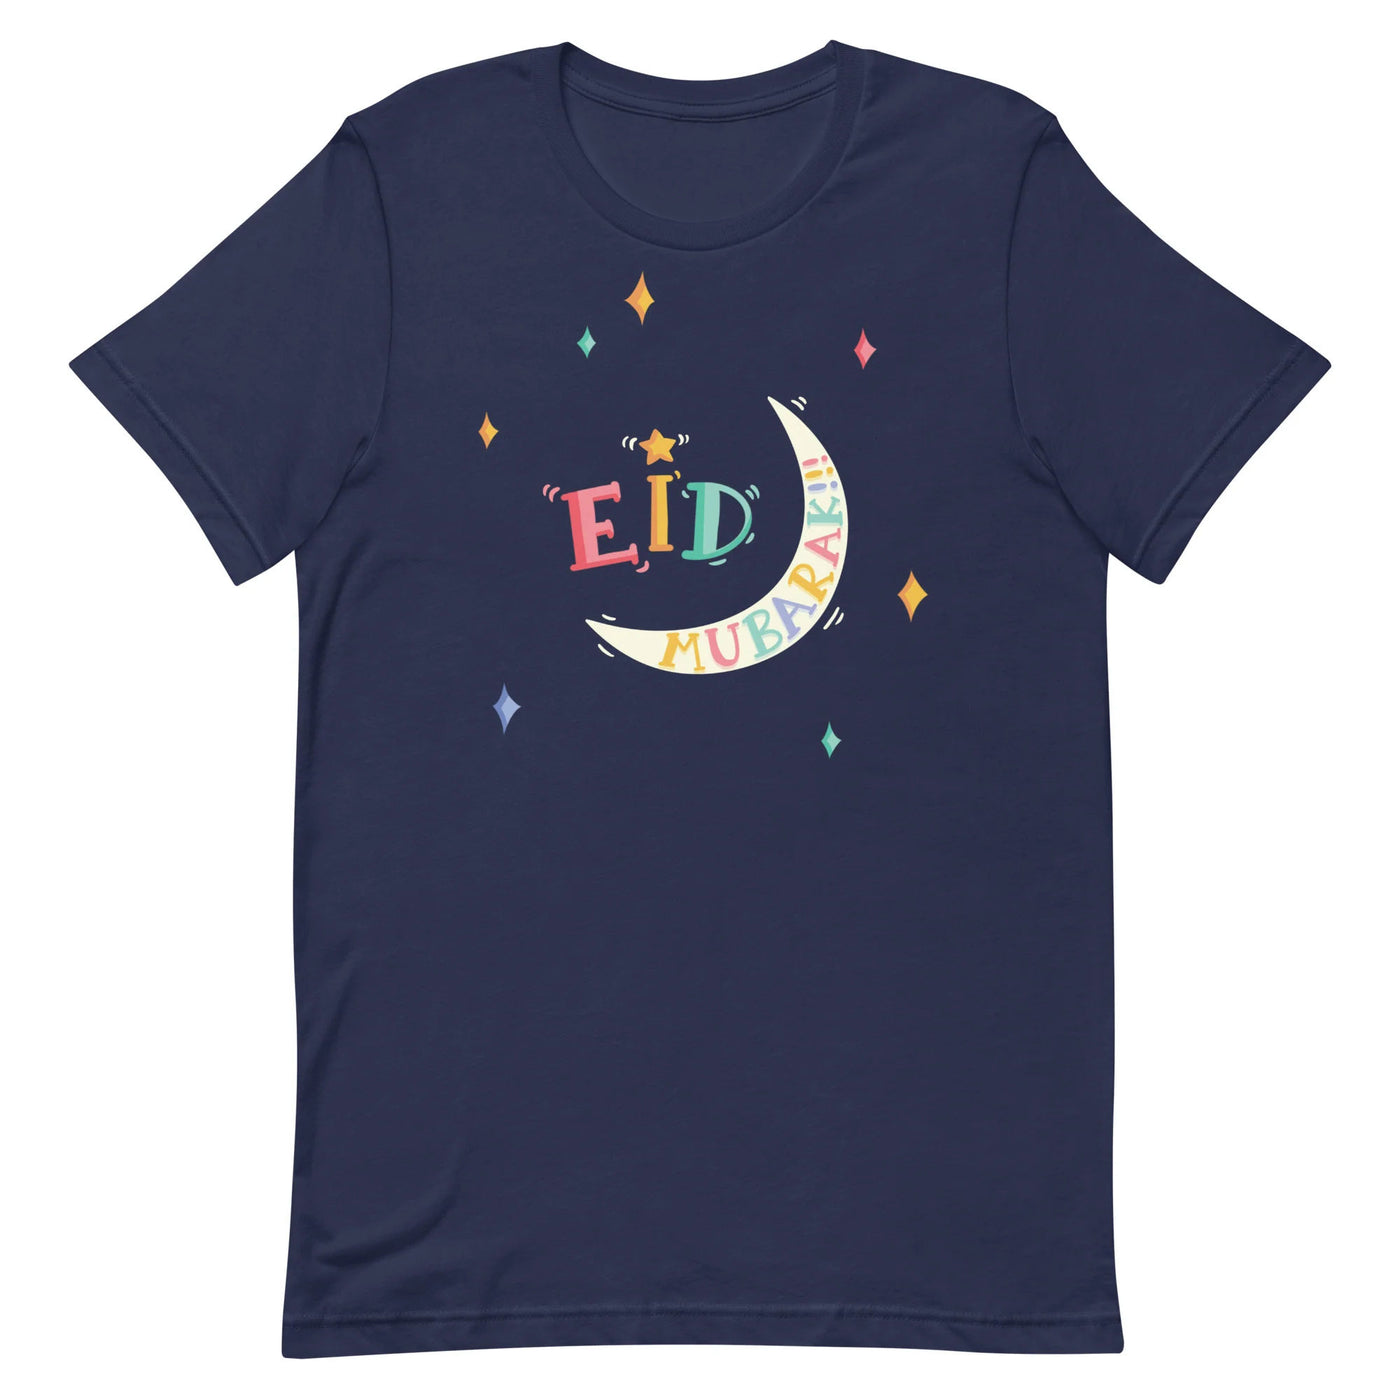 Eid Mubarak Adult T-shirt by The Cute Pista 